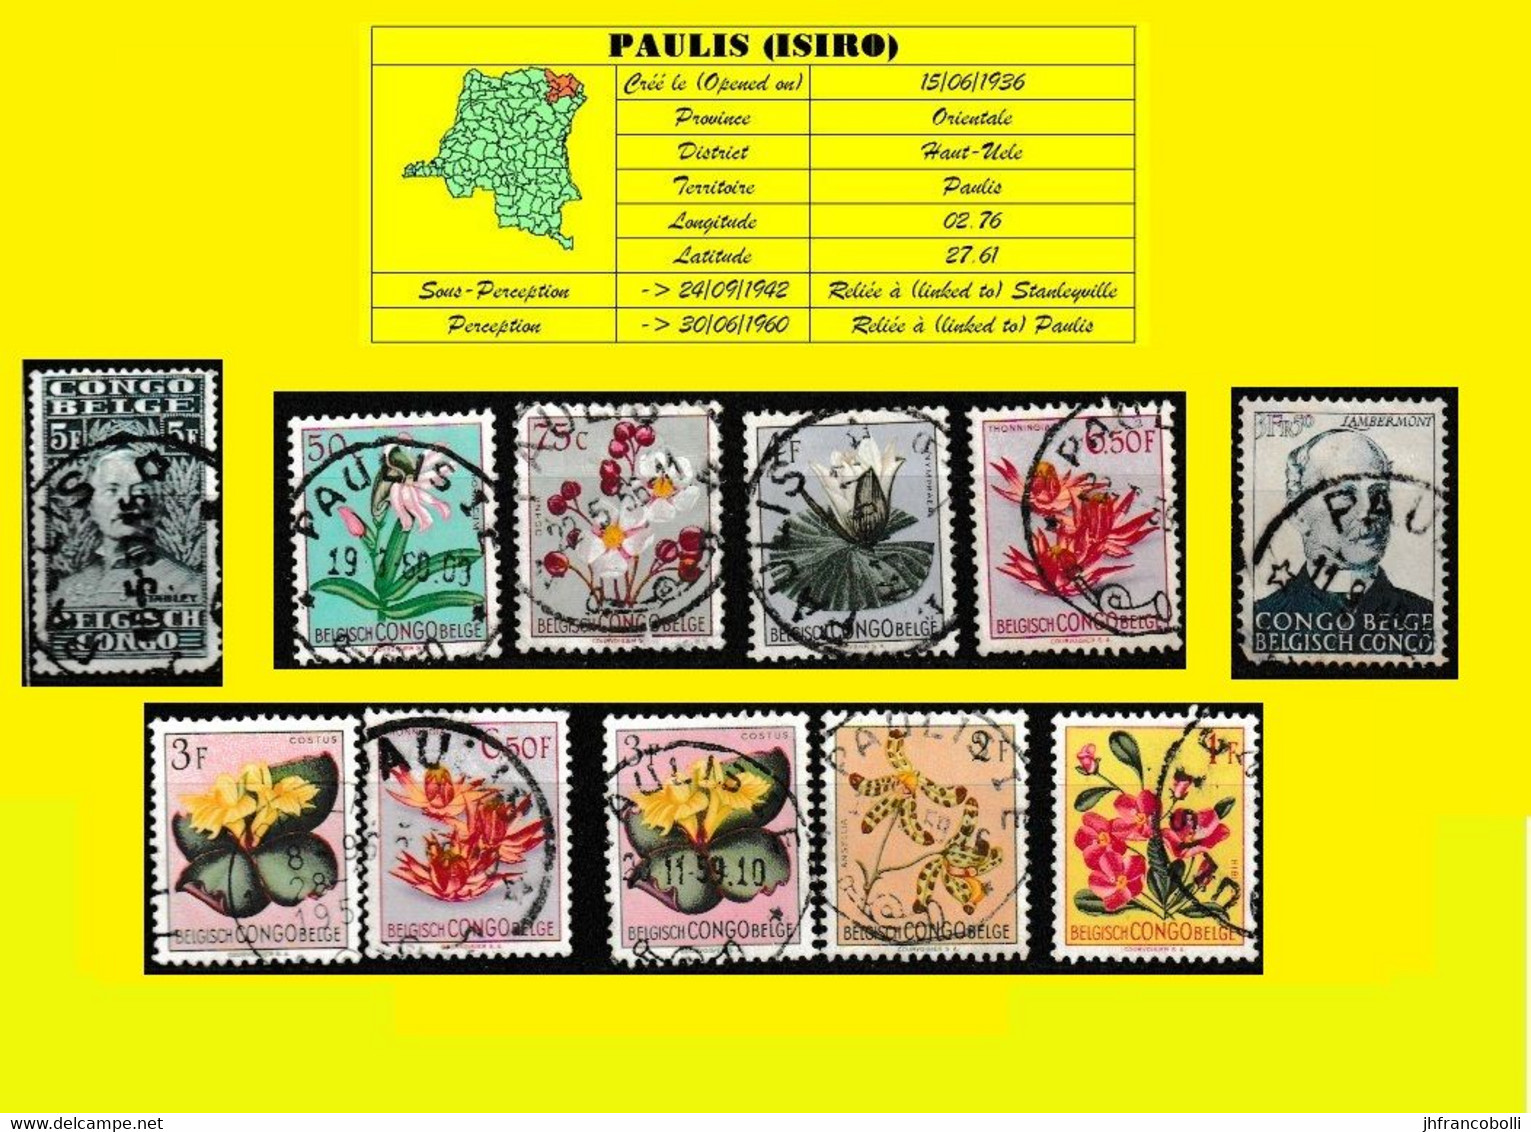 (°) BELGIAN CONGO / CONGO BELGE =  PAULIS CANCELATION STUDY = 11 STAMPS (mainly Tropical Flowers) - Errors & Oddities